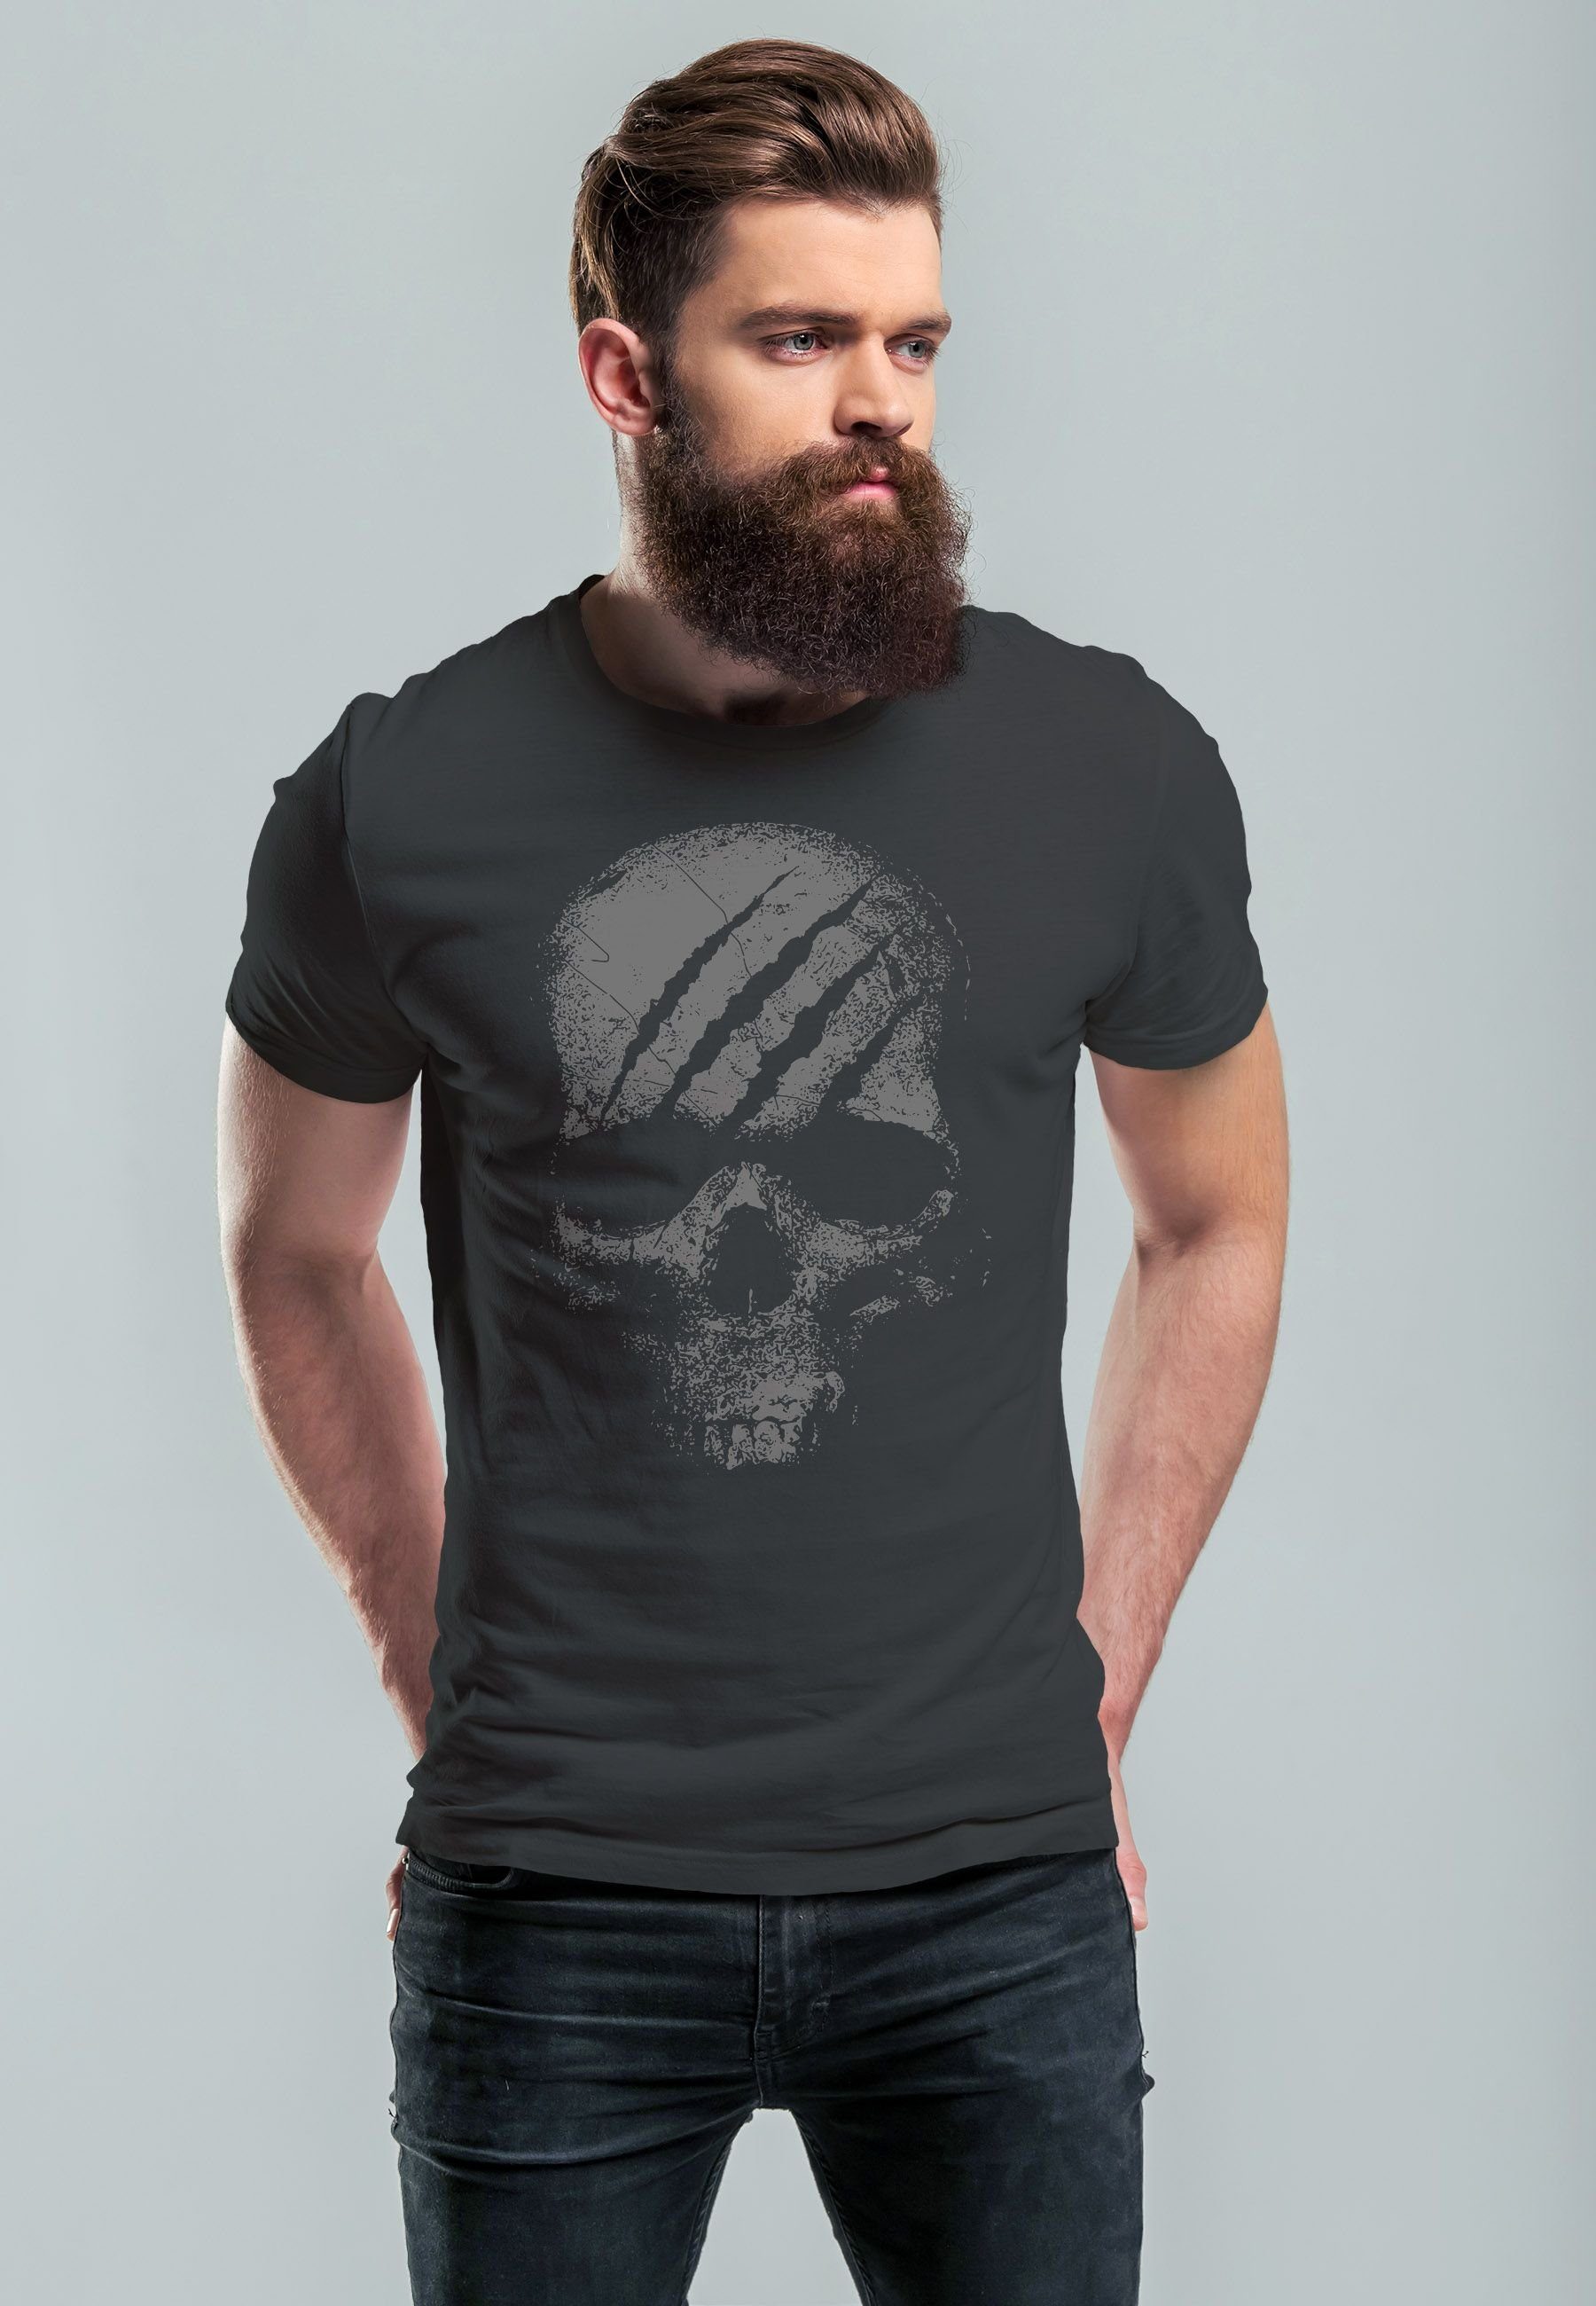 Herren Aufdruck Print Print-Shirt Skull T-Shirt Print mit Skelett Totenschädel Neverless Fas Totenkopf anthrazit